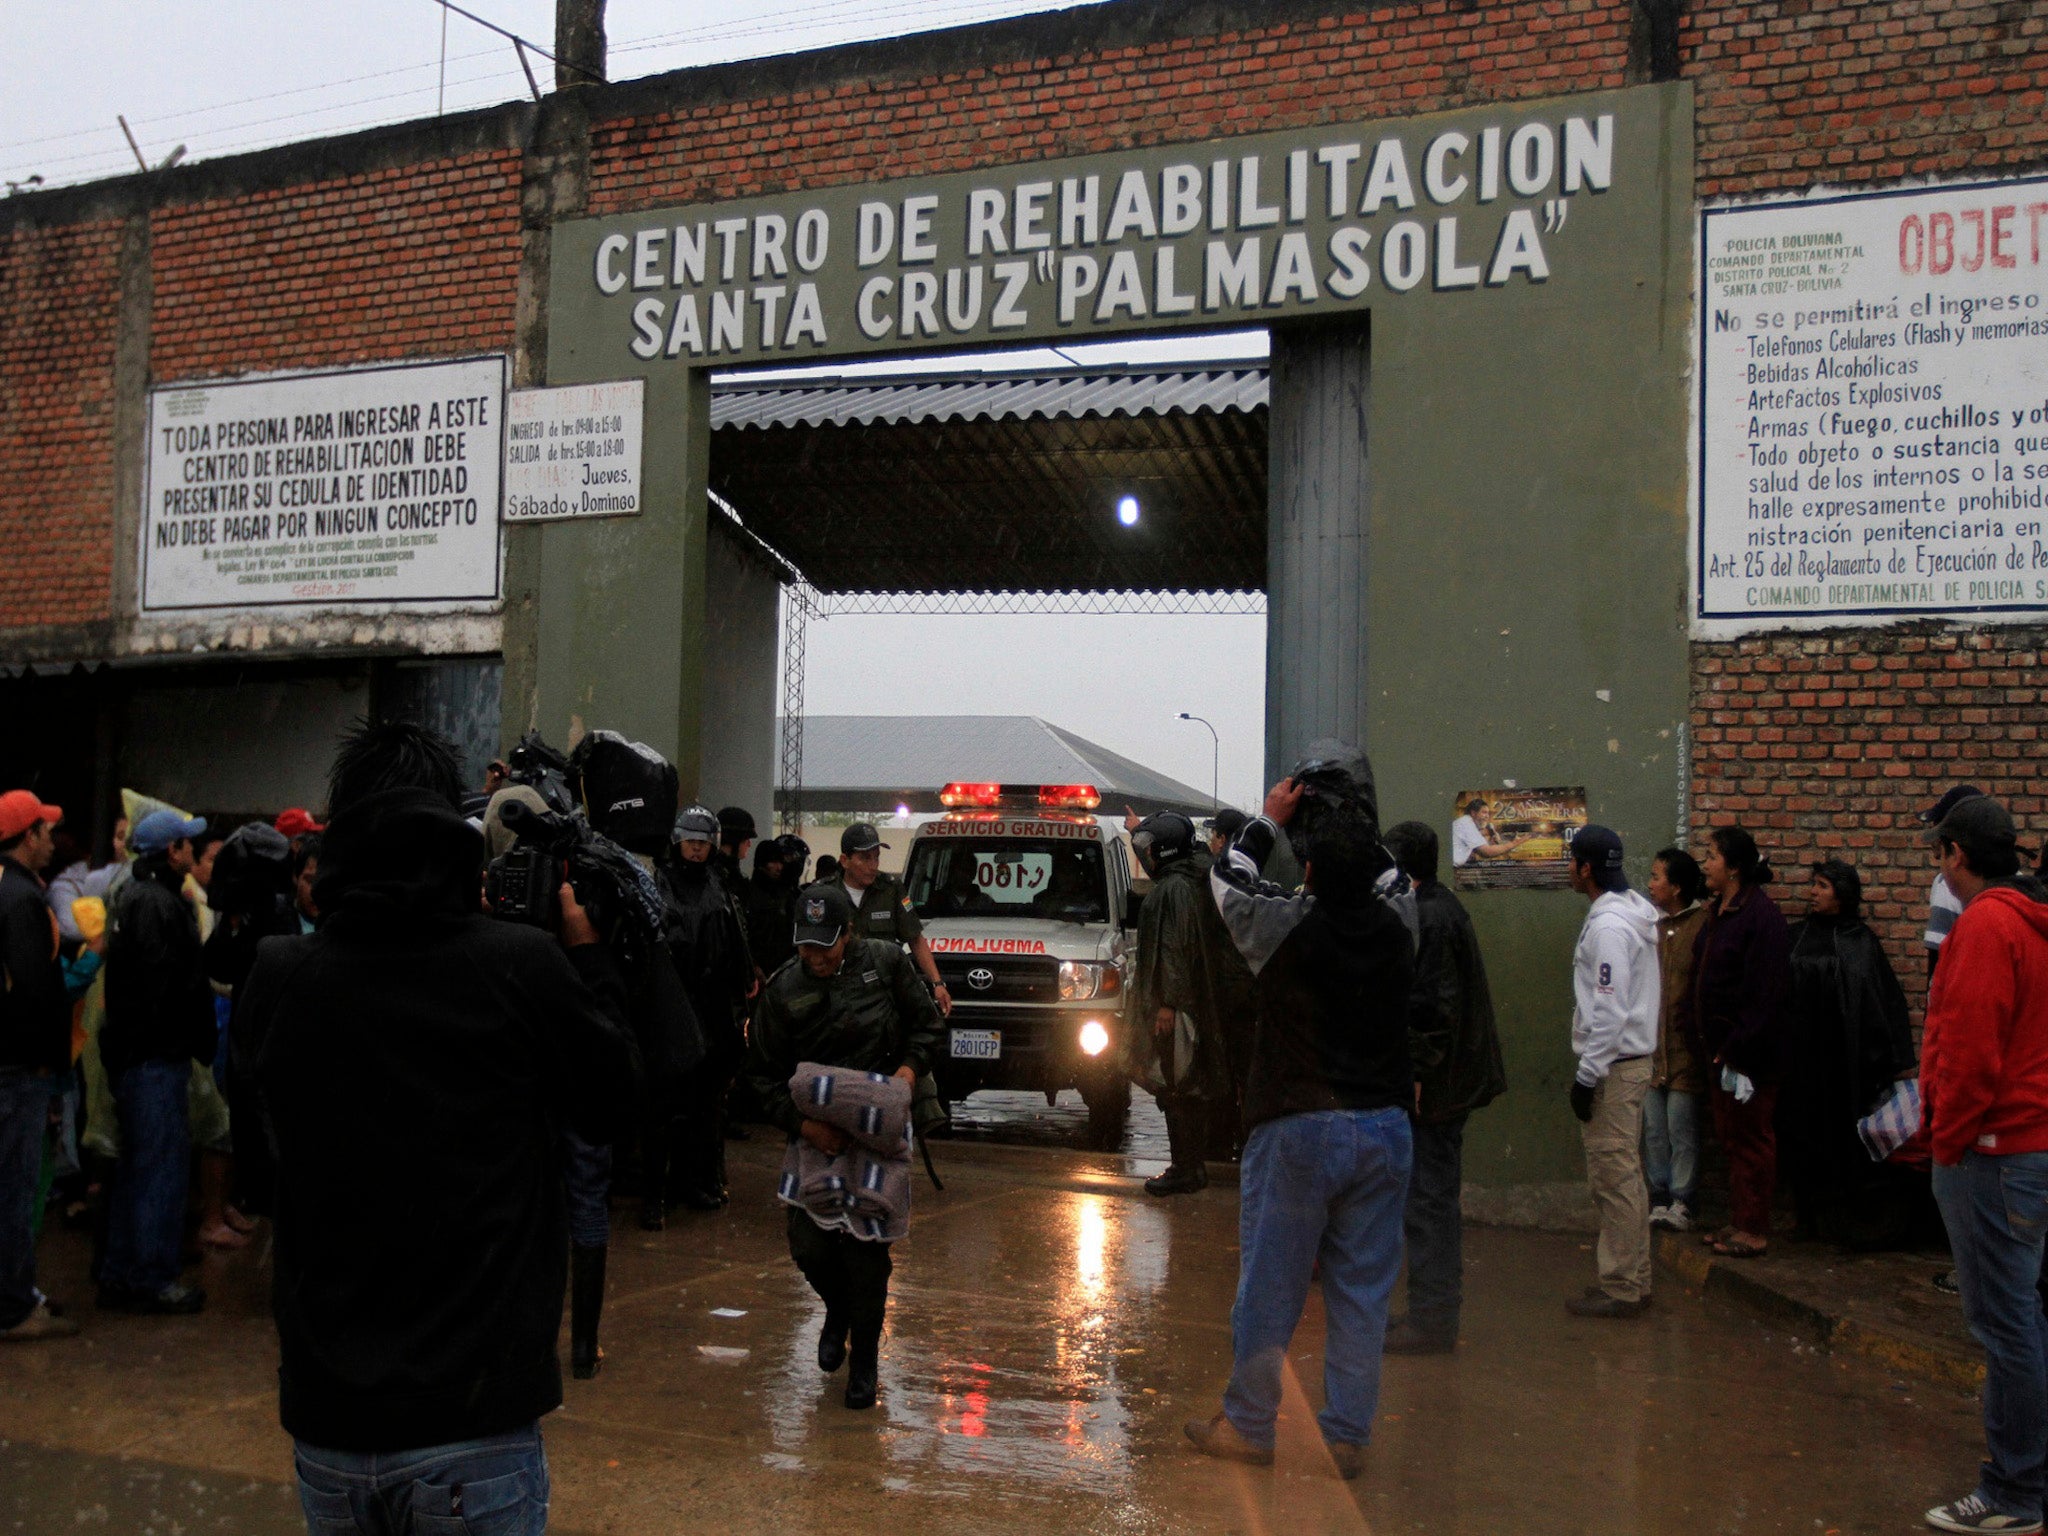 Palmasola Prison in Bolivia